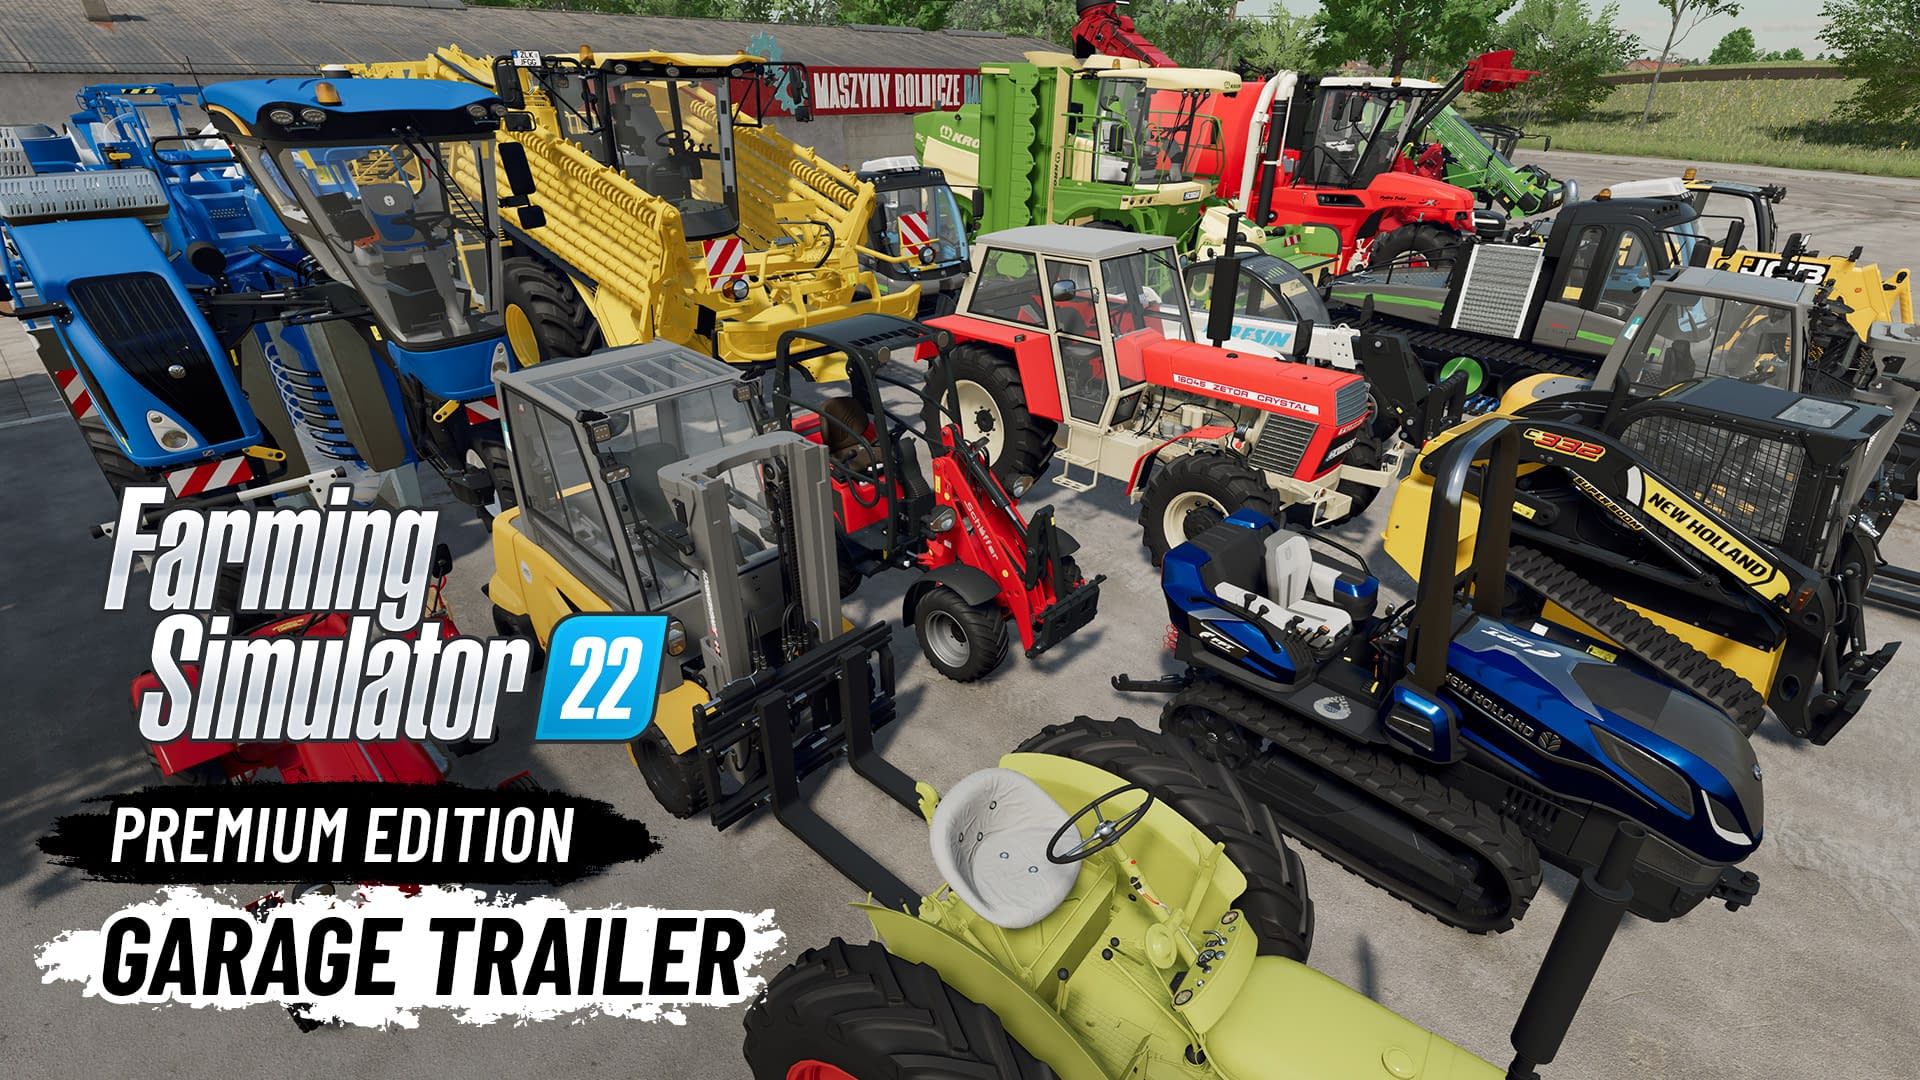 Farming Simulator 22 premium edition and expansion announced